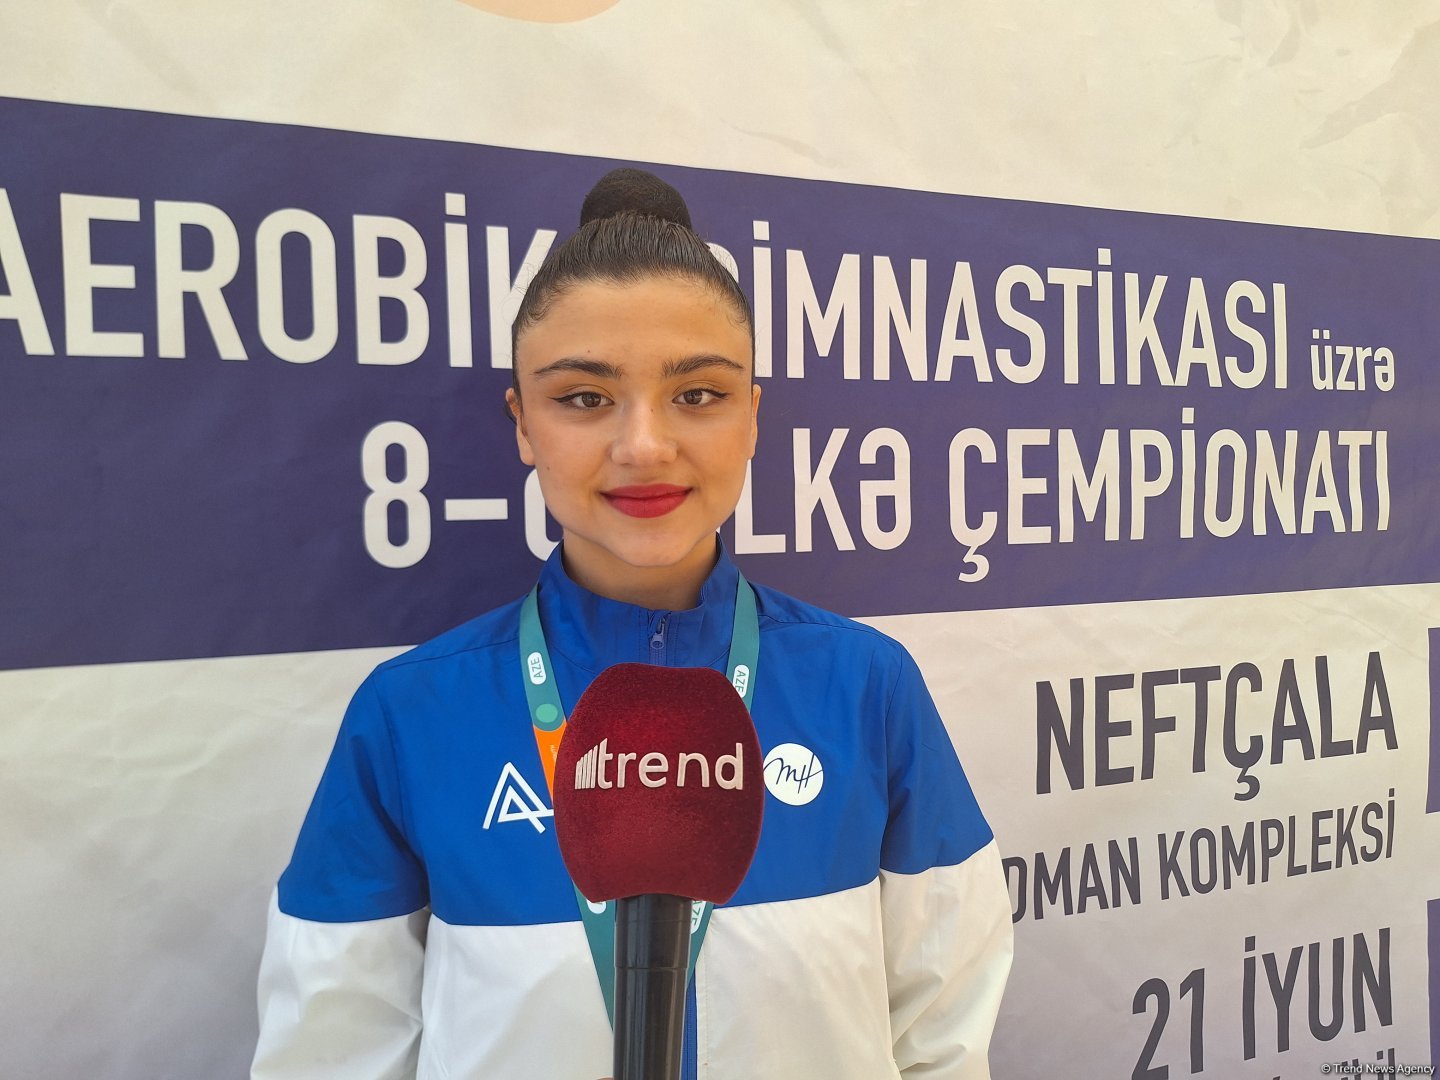 Regional contests shape athletes' training positively - Azerbaijani Championship winner